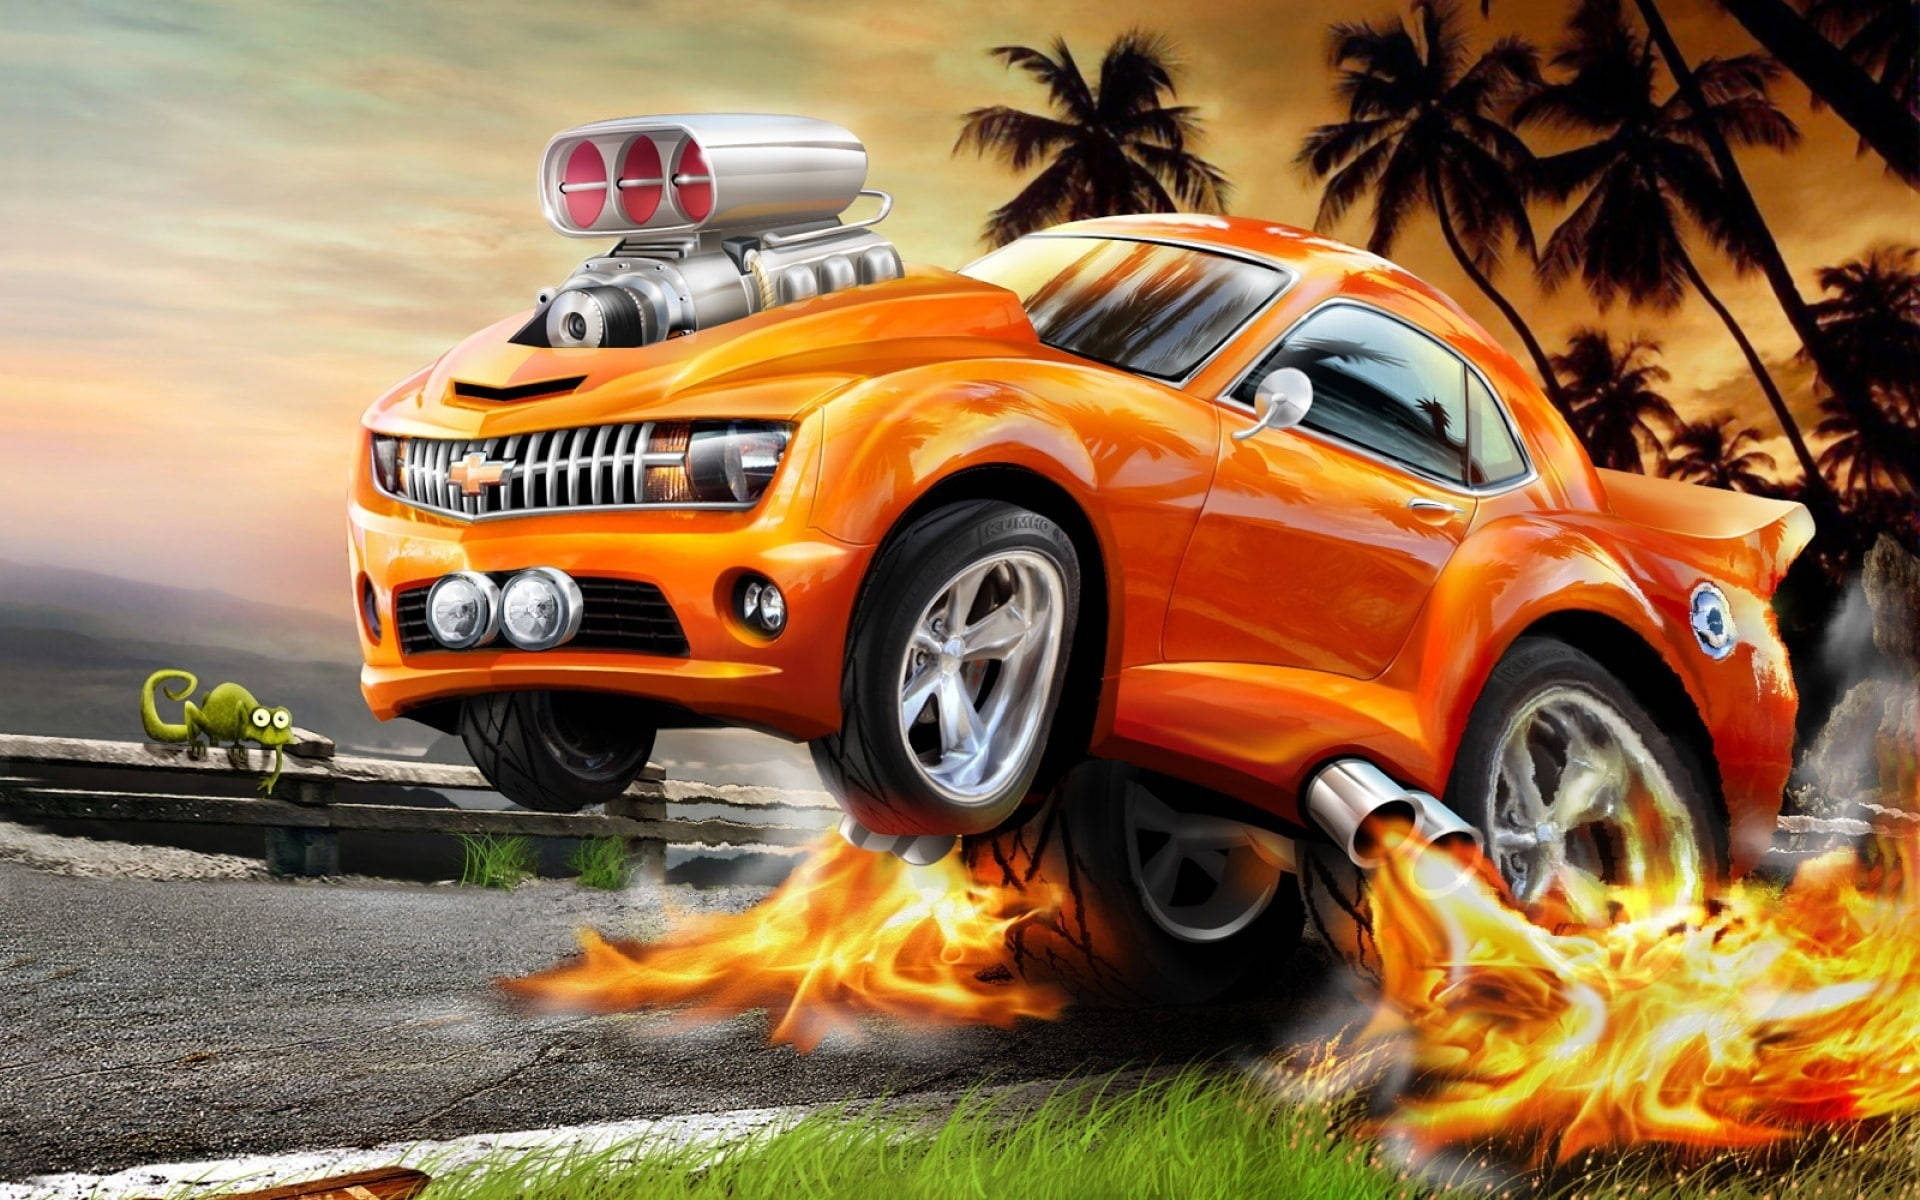 Cartoon Orange Fire Car Bursting Flames On Road Background